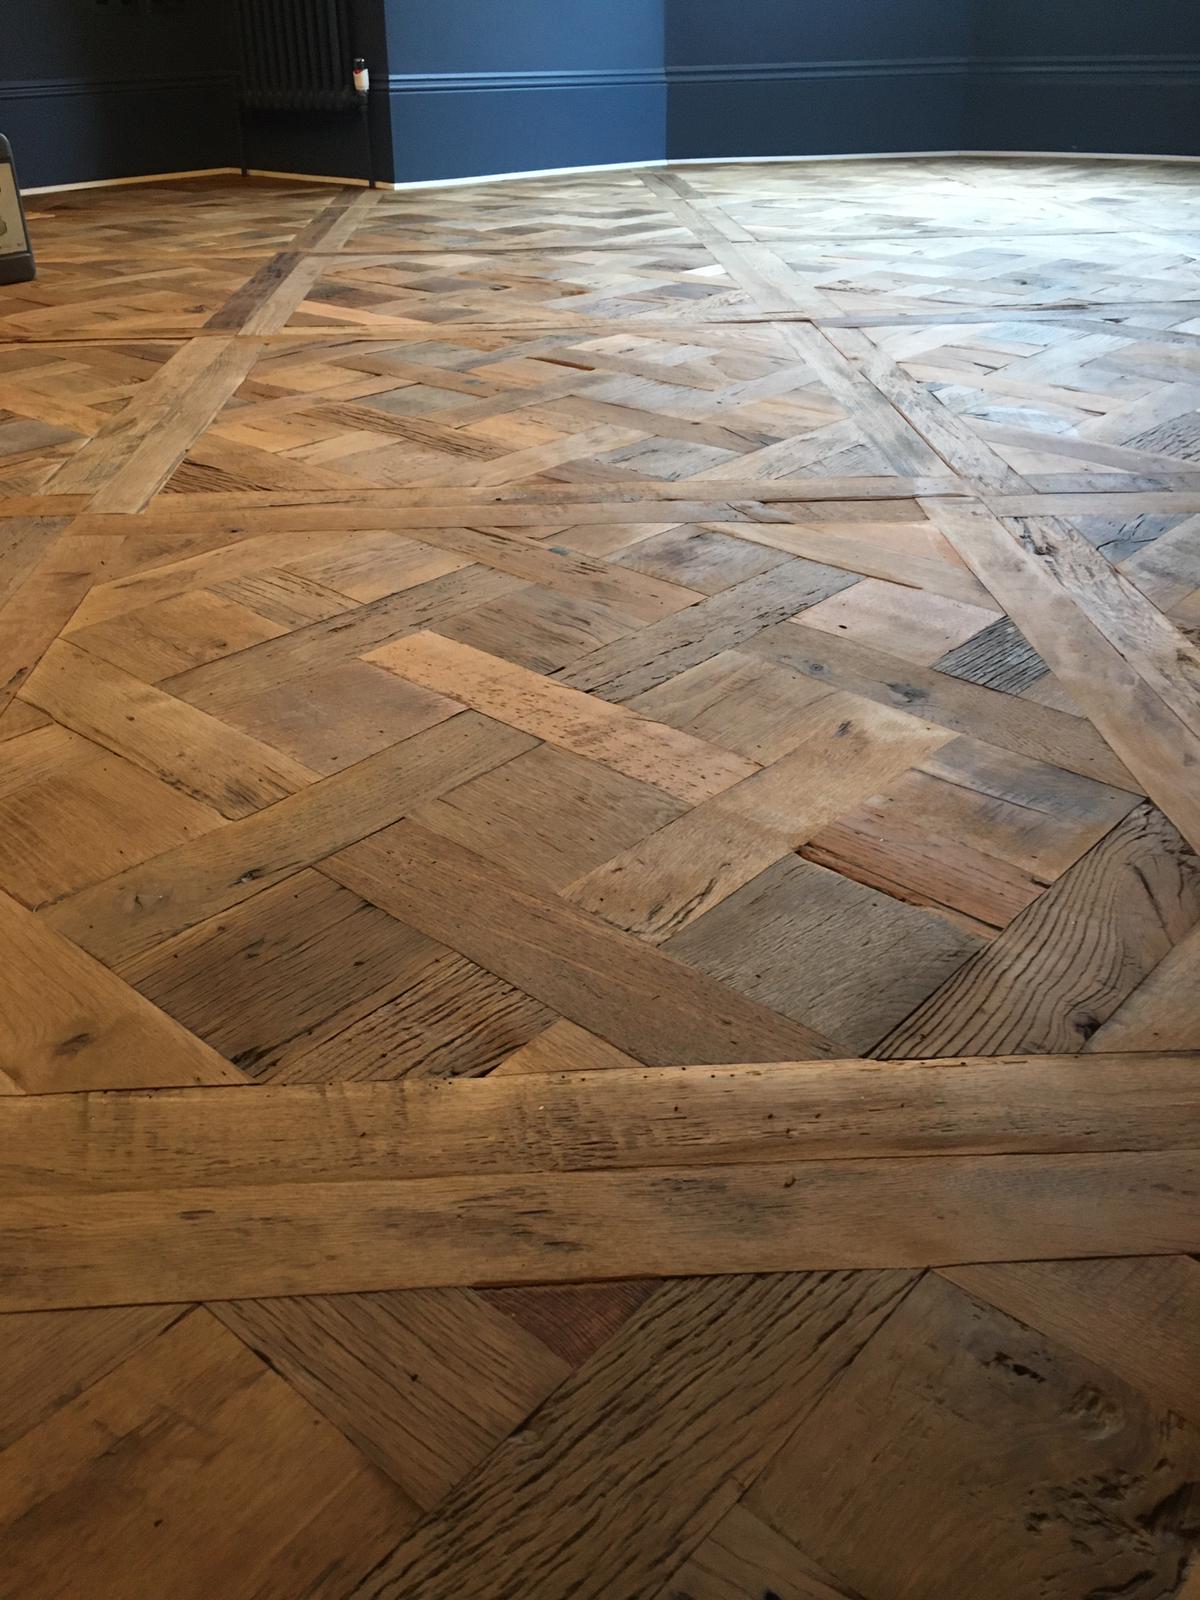 How Wood Floor Patterns Affect Your Décor